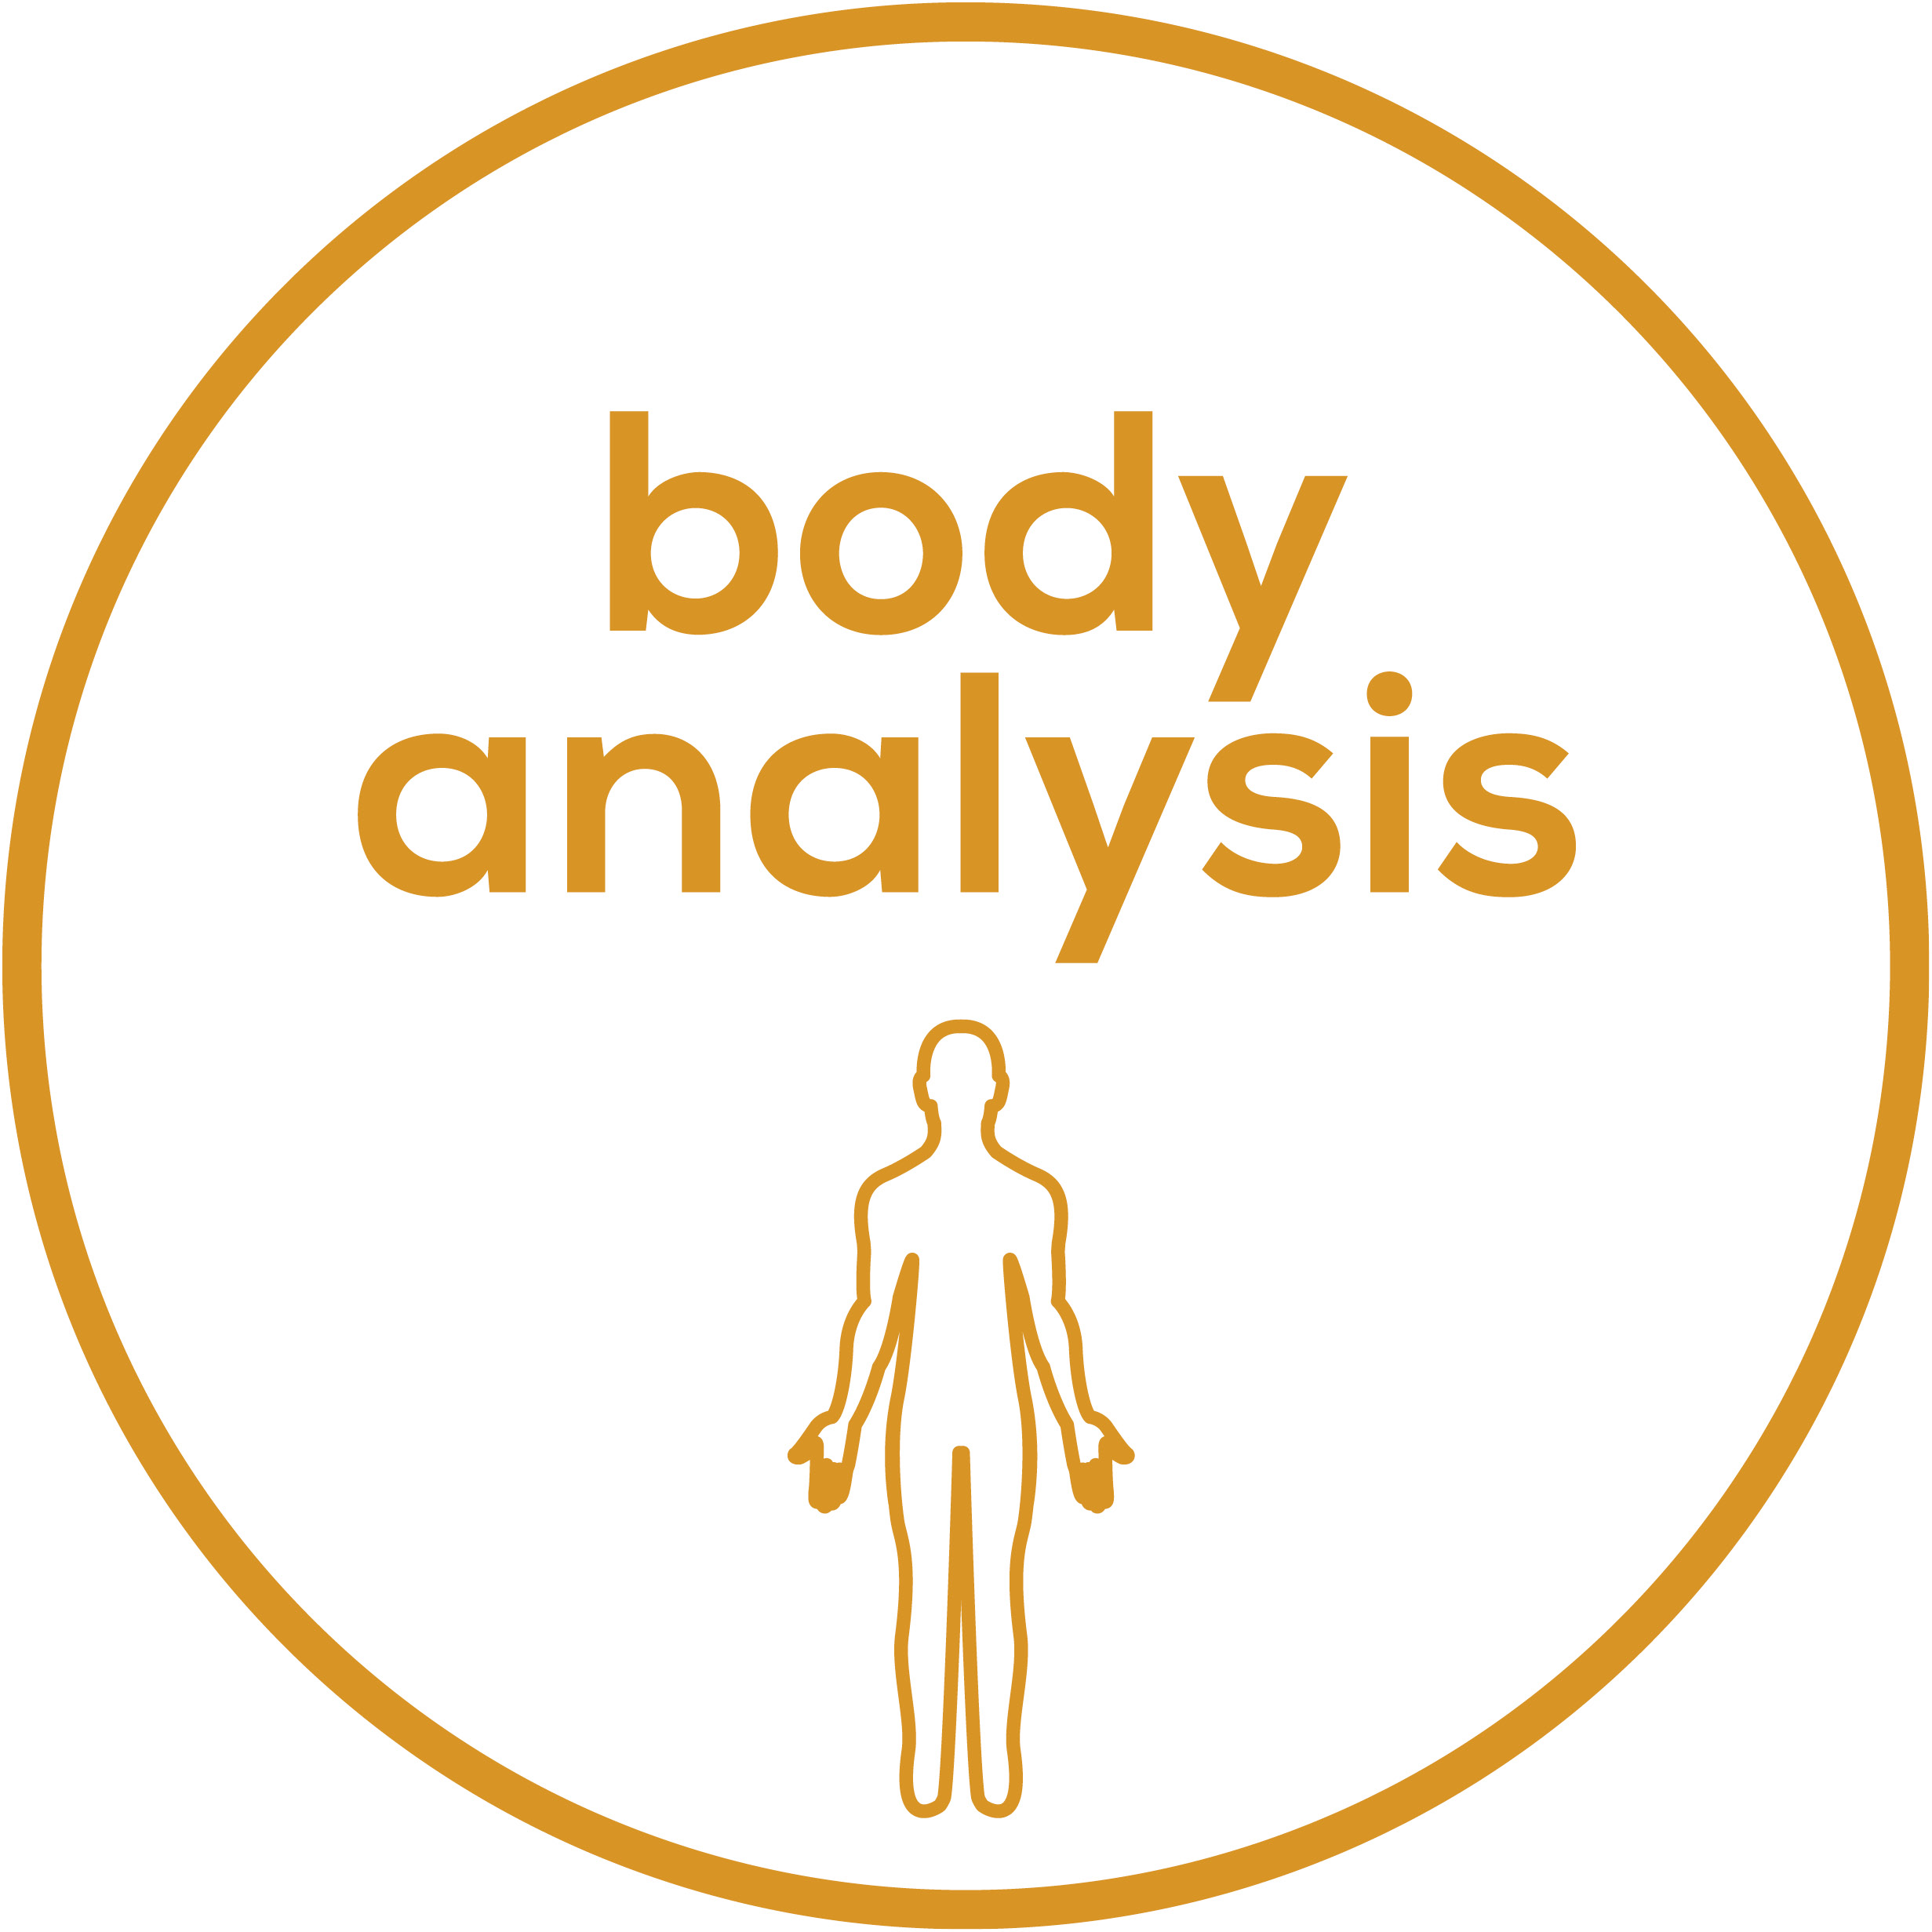 Body analysis